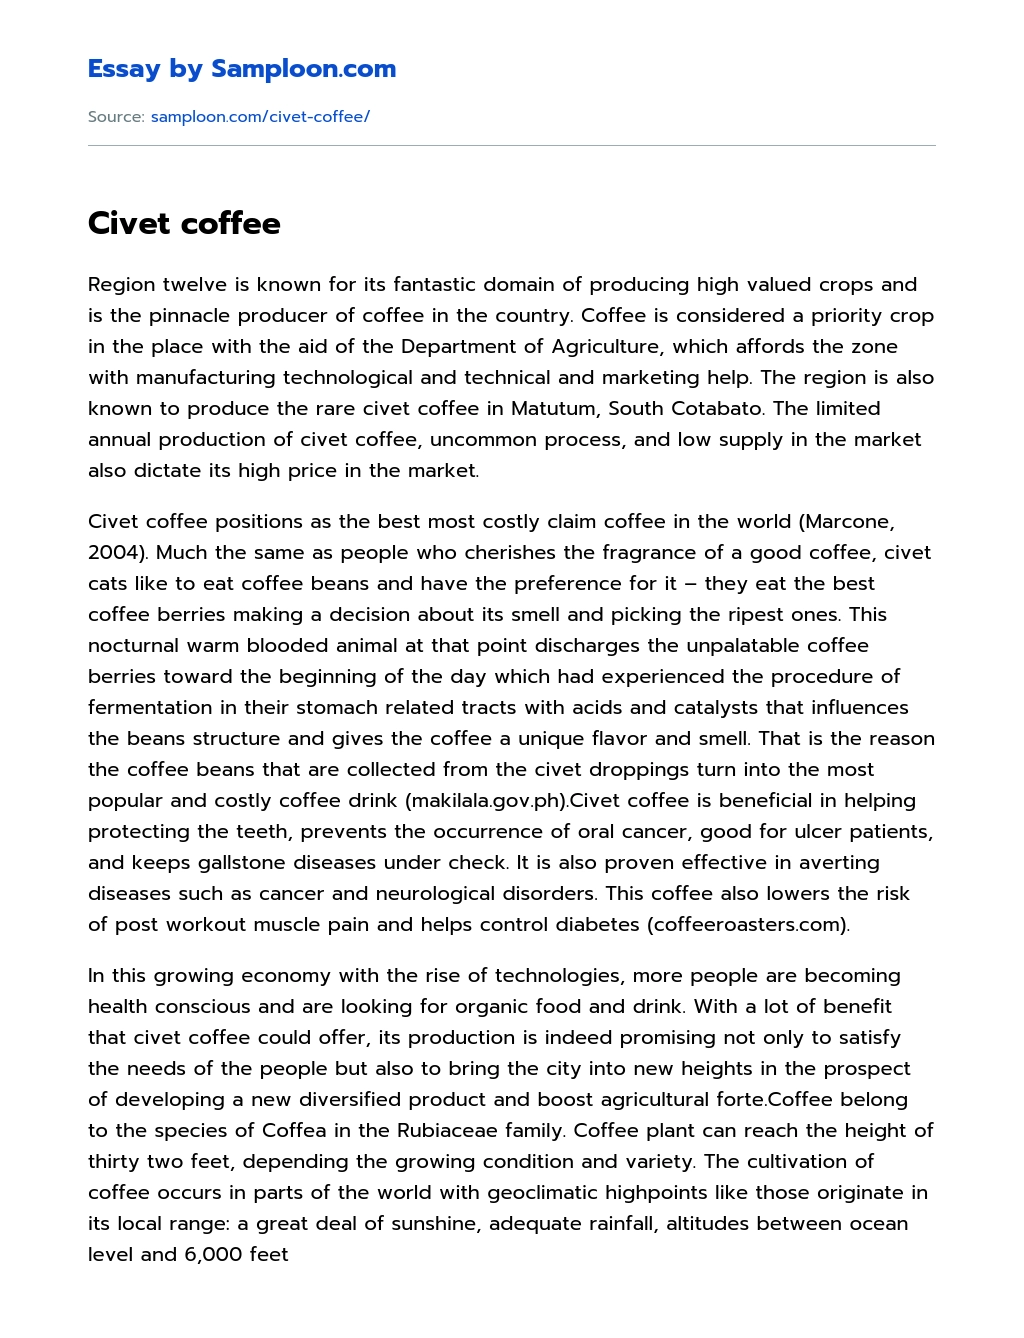 Civet coffee essay